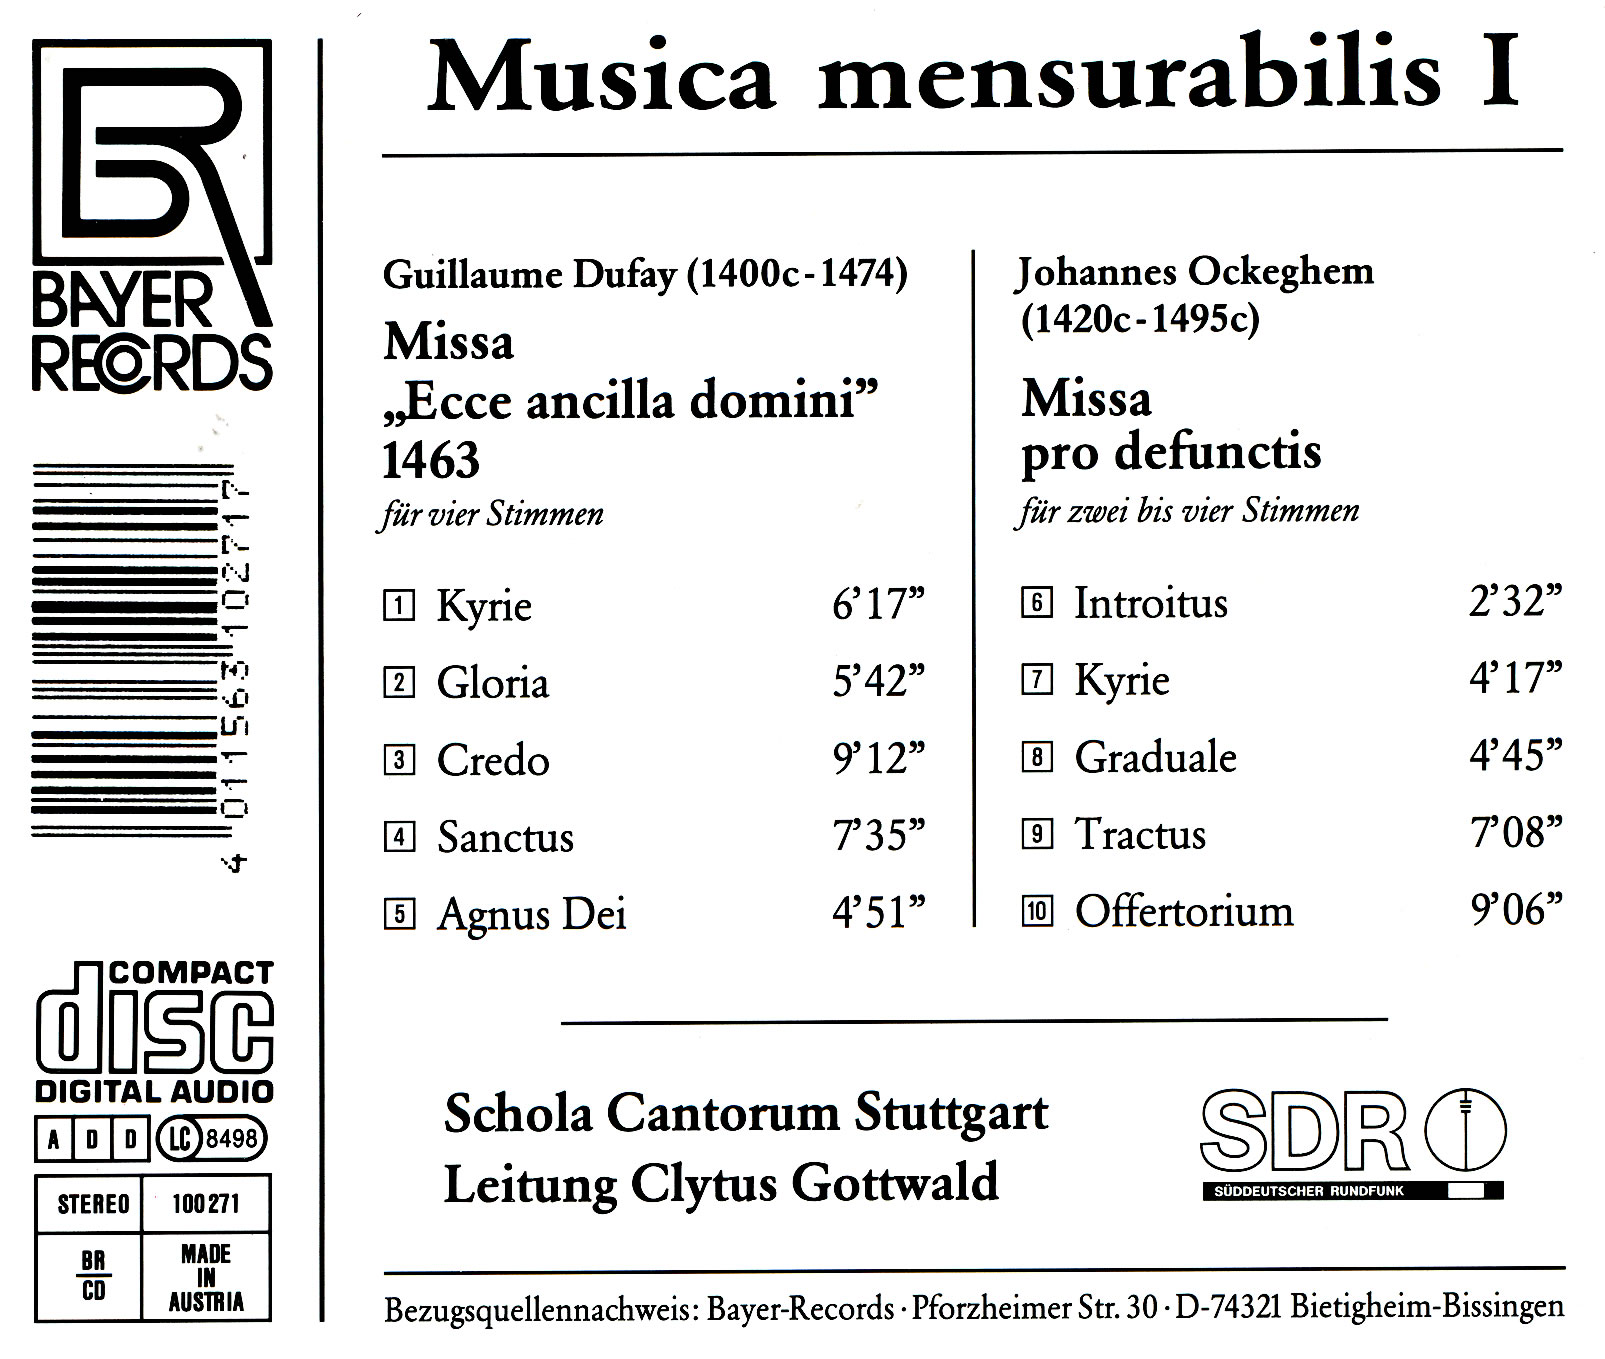 Musica mensurabilis I